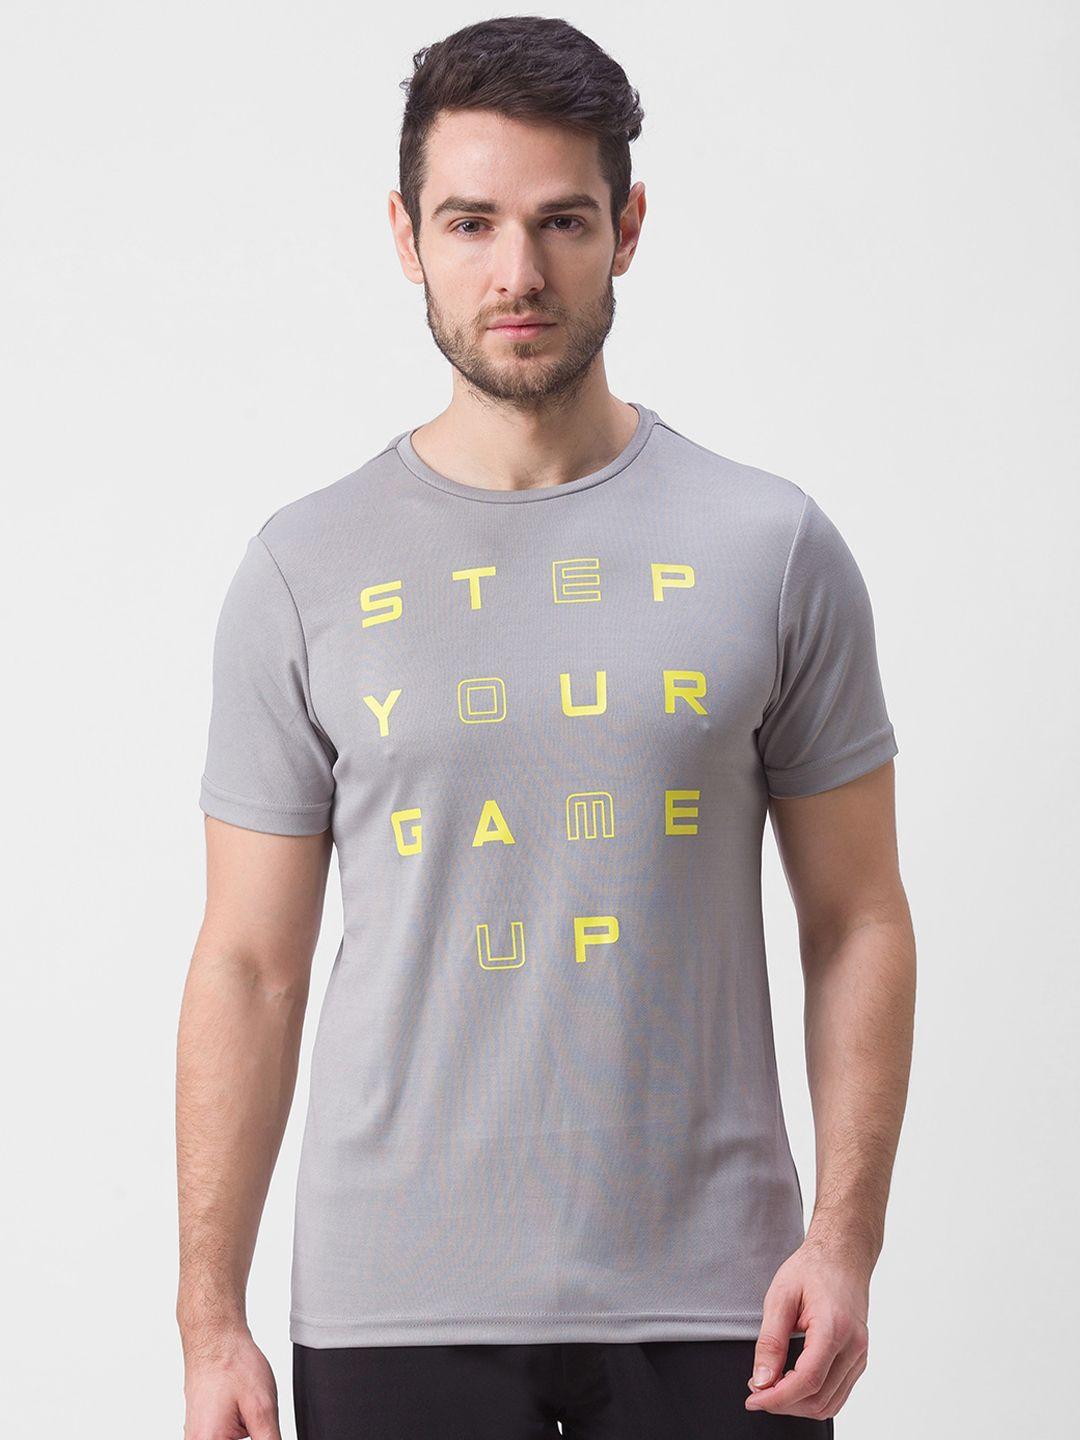 globus-men-grey-typography-printed-slim-fit-training-or-gym-t-shirt